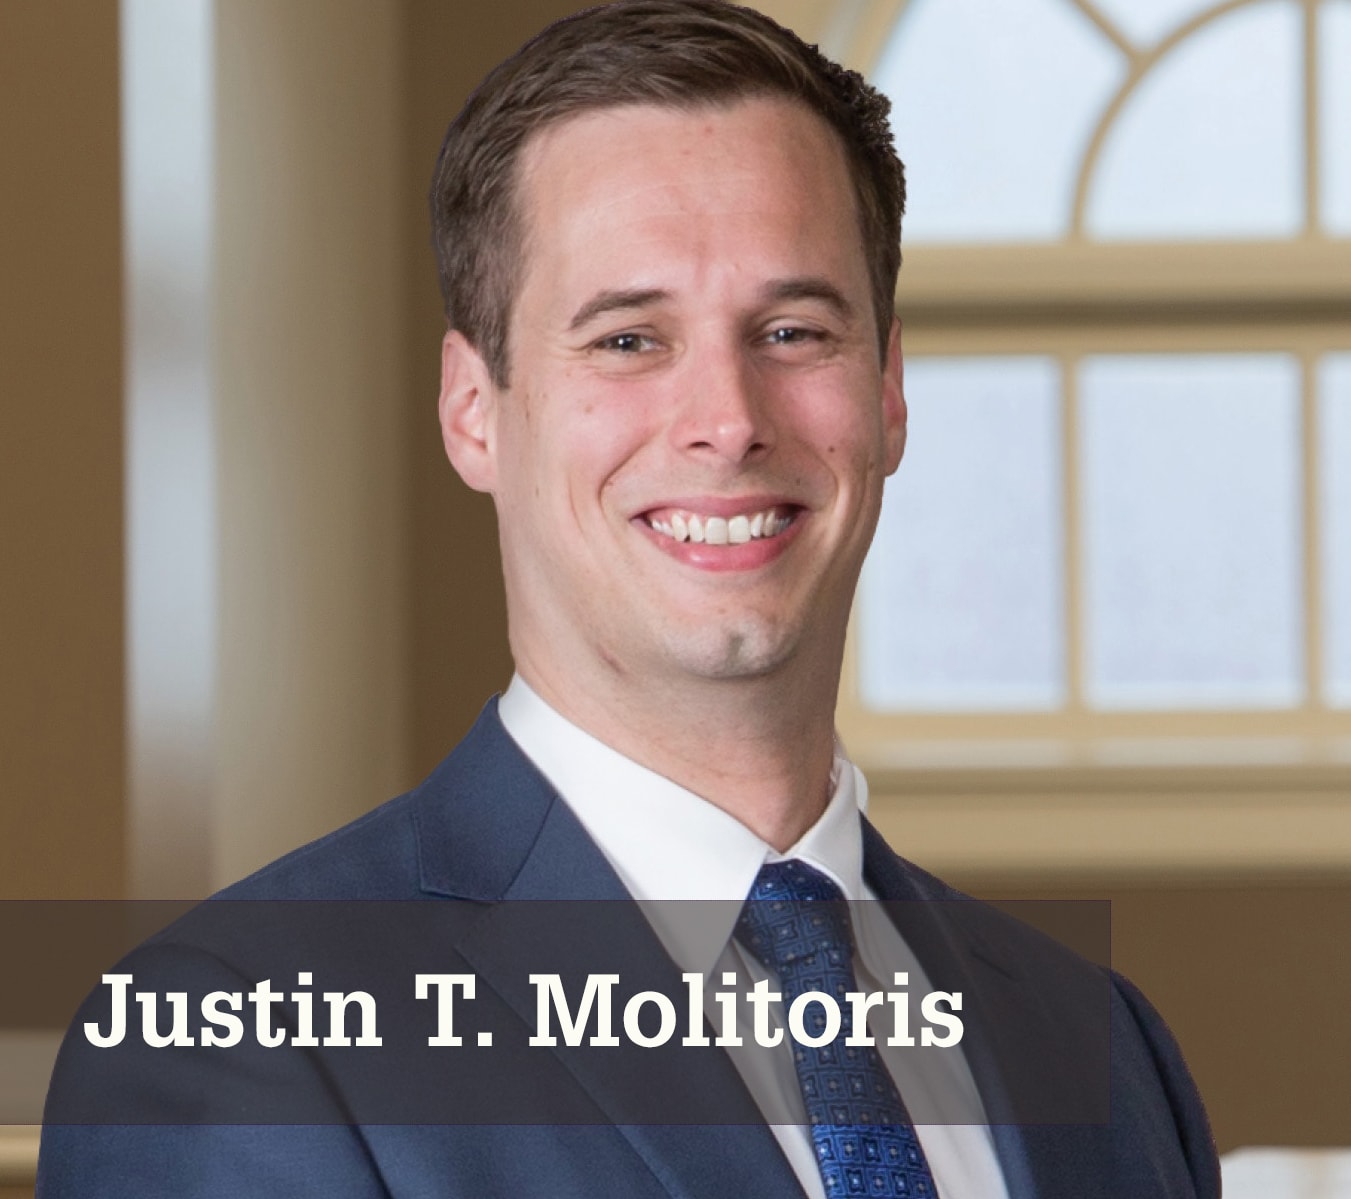 Justin T. Molitoris